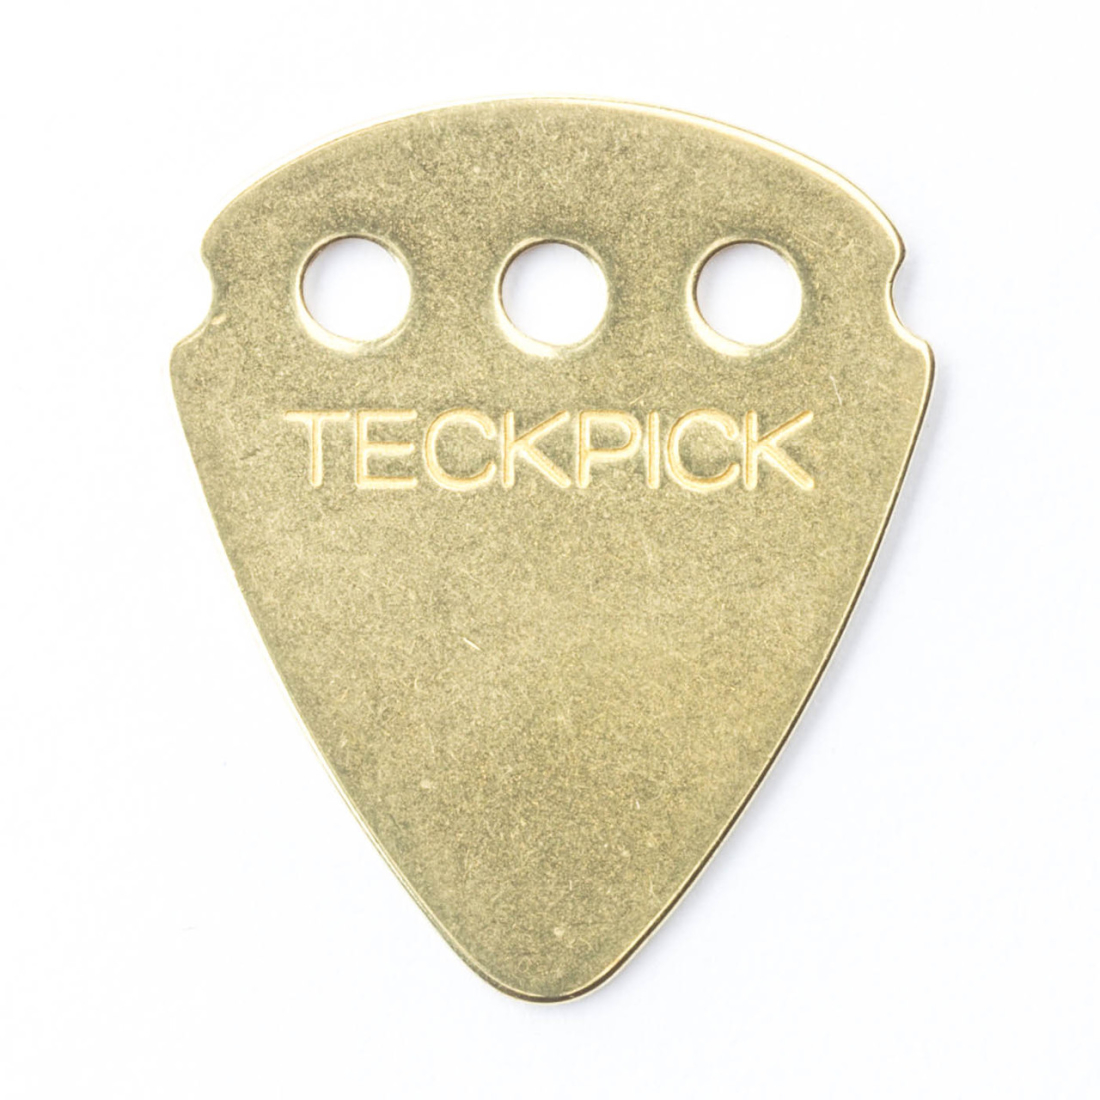 Teckpick Picks Refill (12 Pack) - Brass